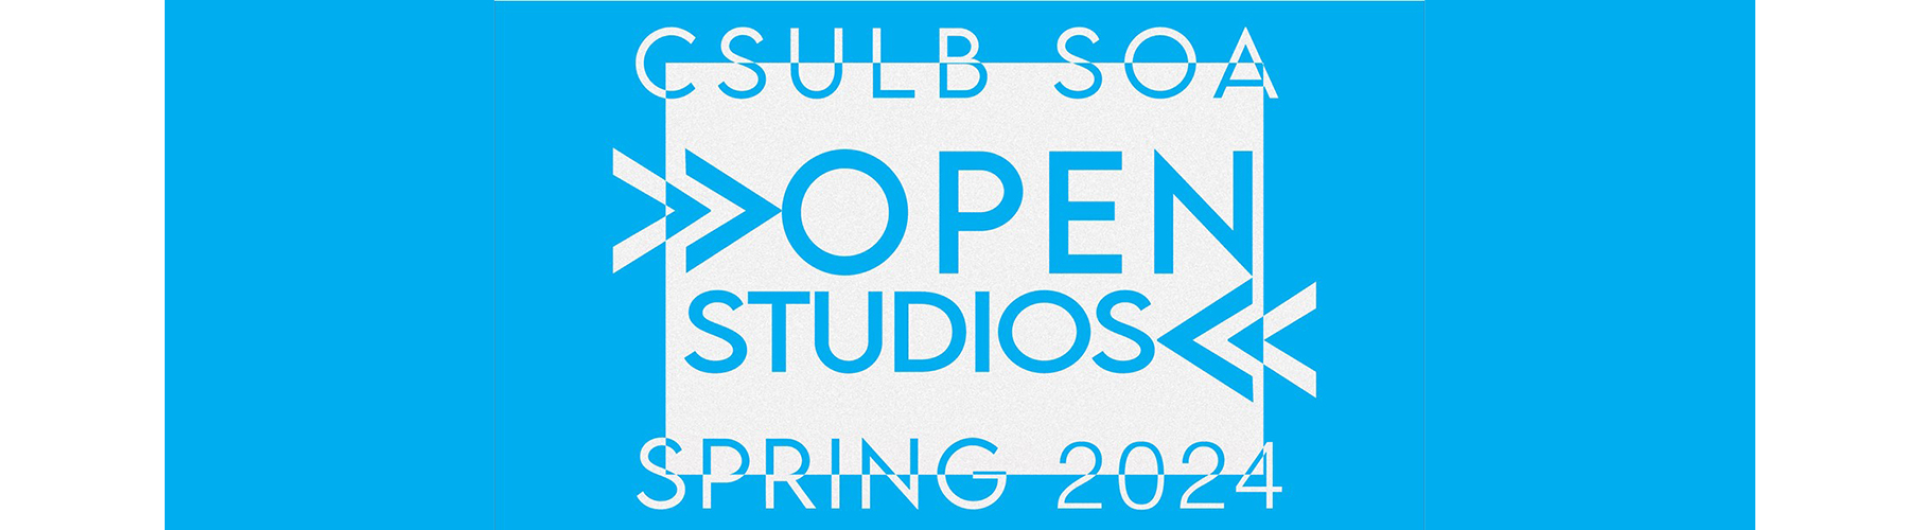 CSULB Open Studios banner